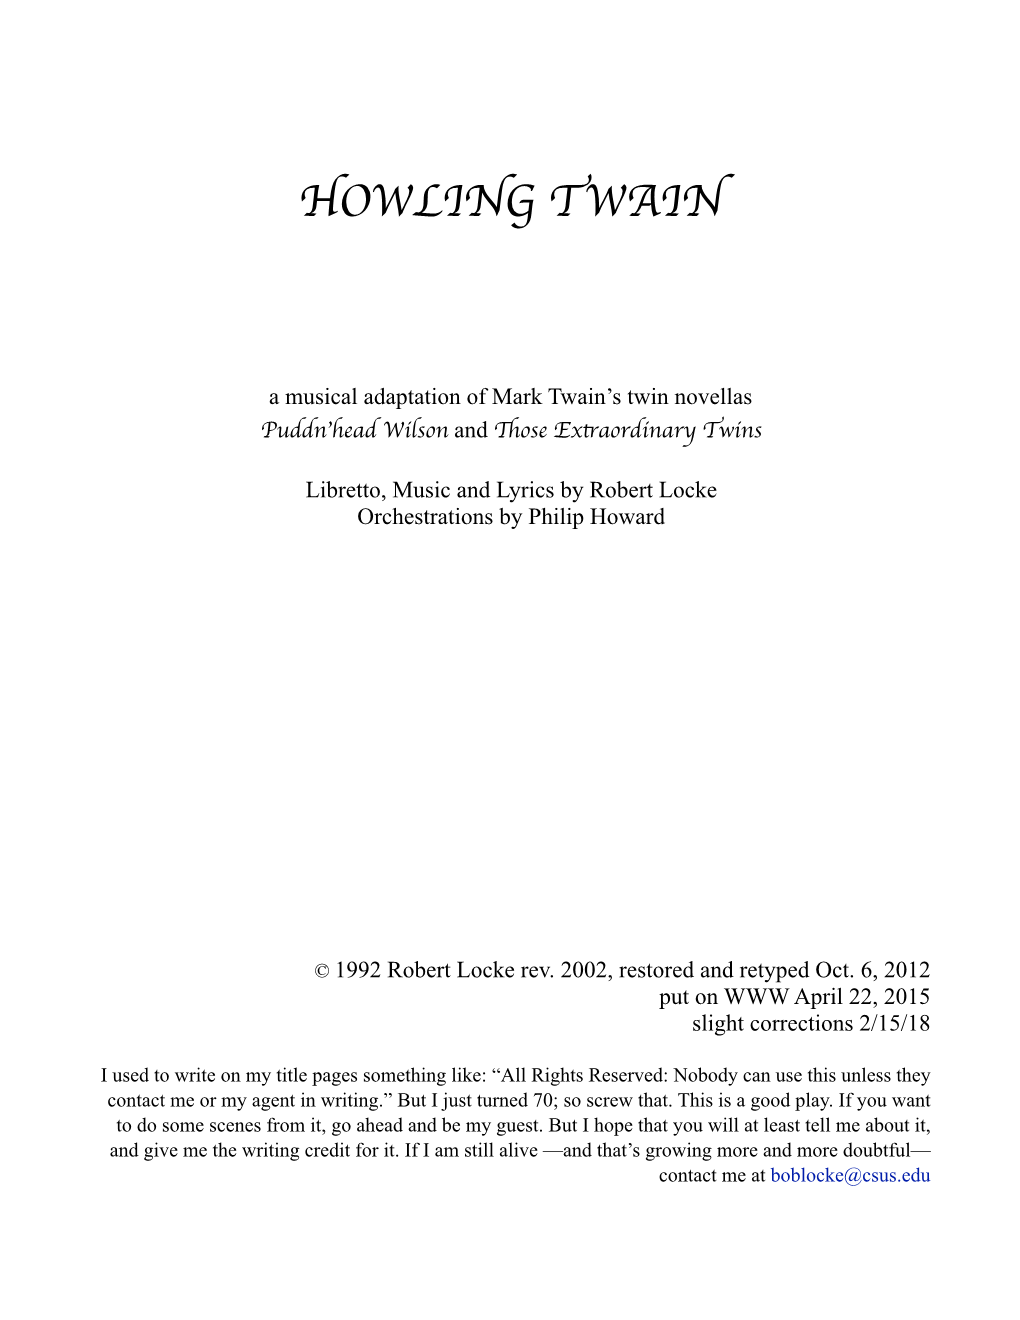 Howling Twain Acts I & 2 Copy